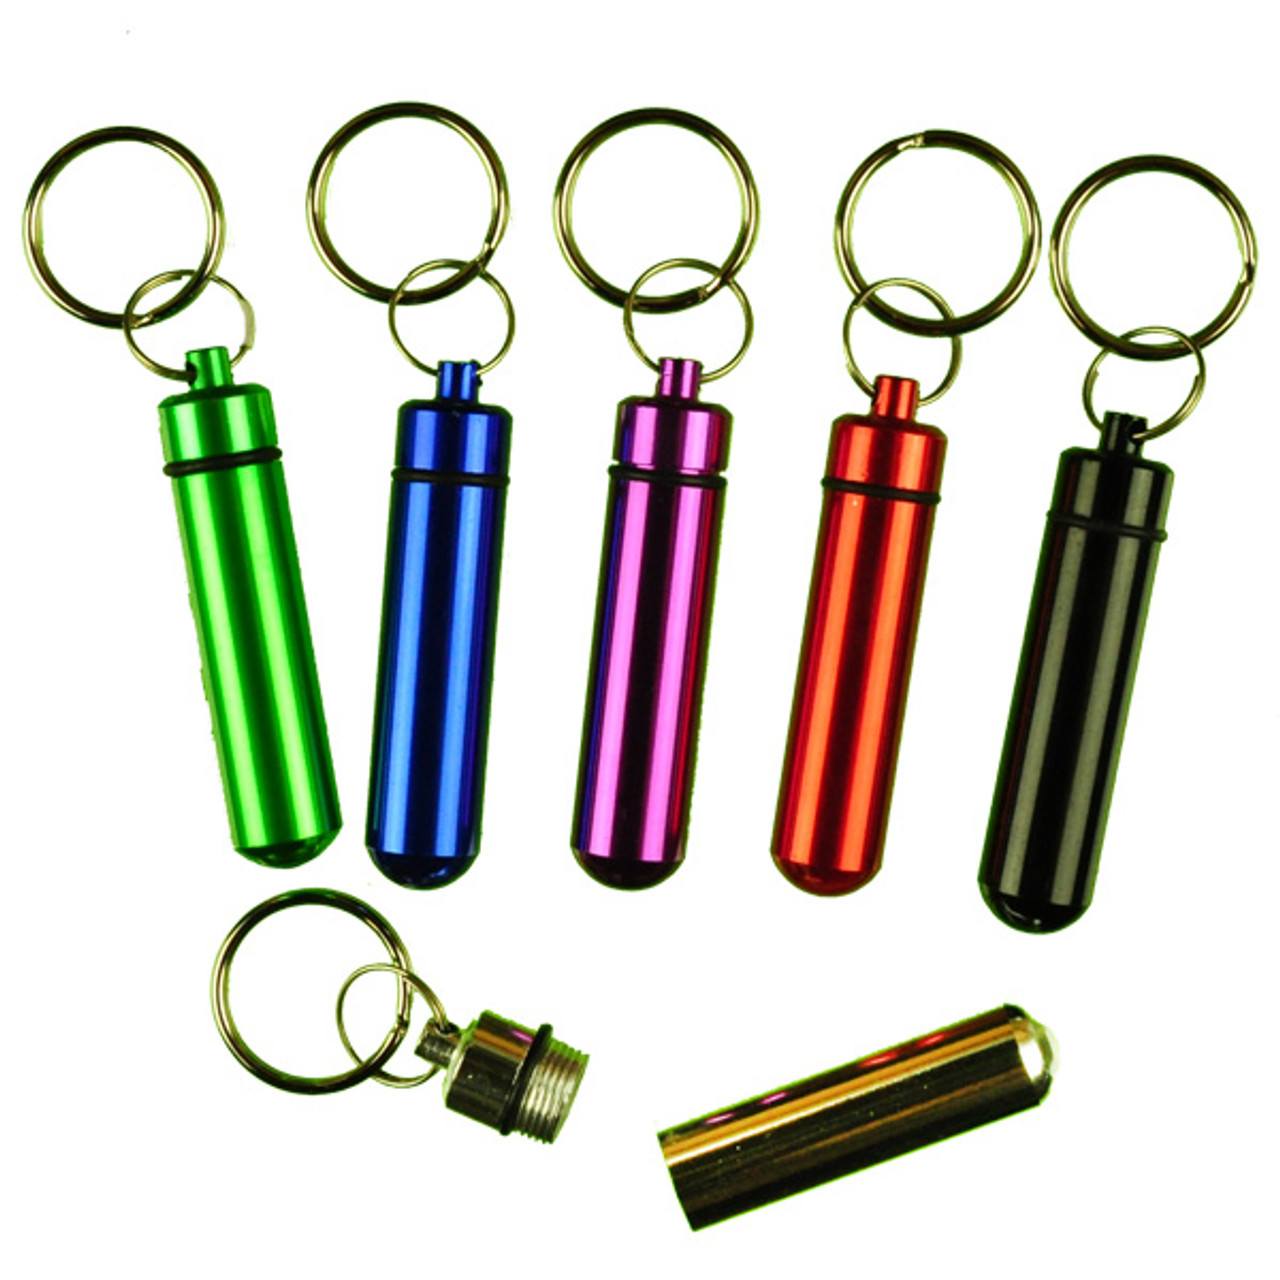 Wholesale Plastic Key Chain Holders,1 Bag